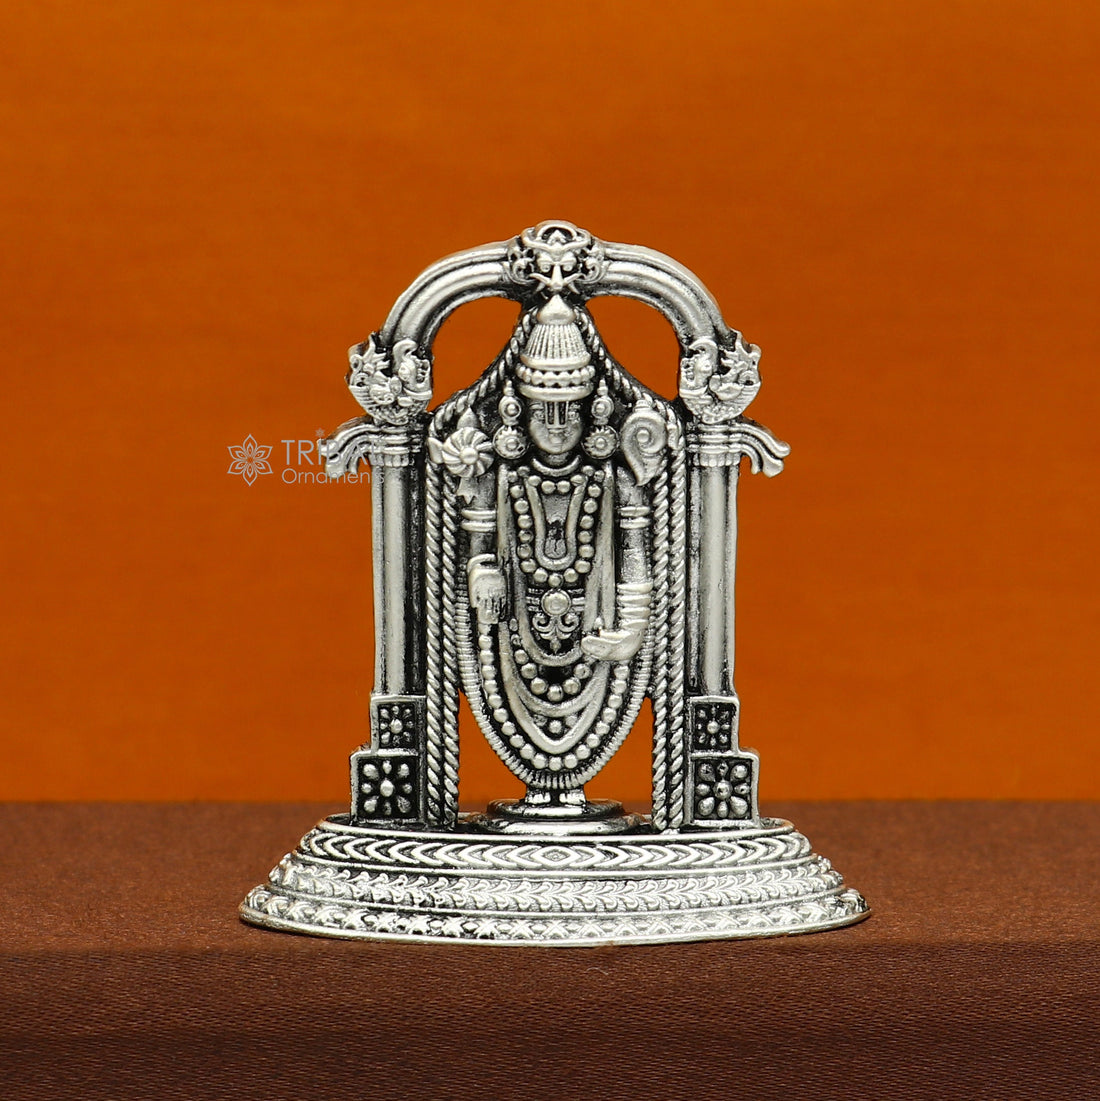 5.1cm 925 sterling silver stylish divine Venkateswara idol tirupati balaji statue sculpture figurine amazing crafted statue gift art733 - TRIBAL ORNAMENTS